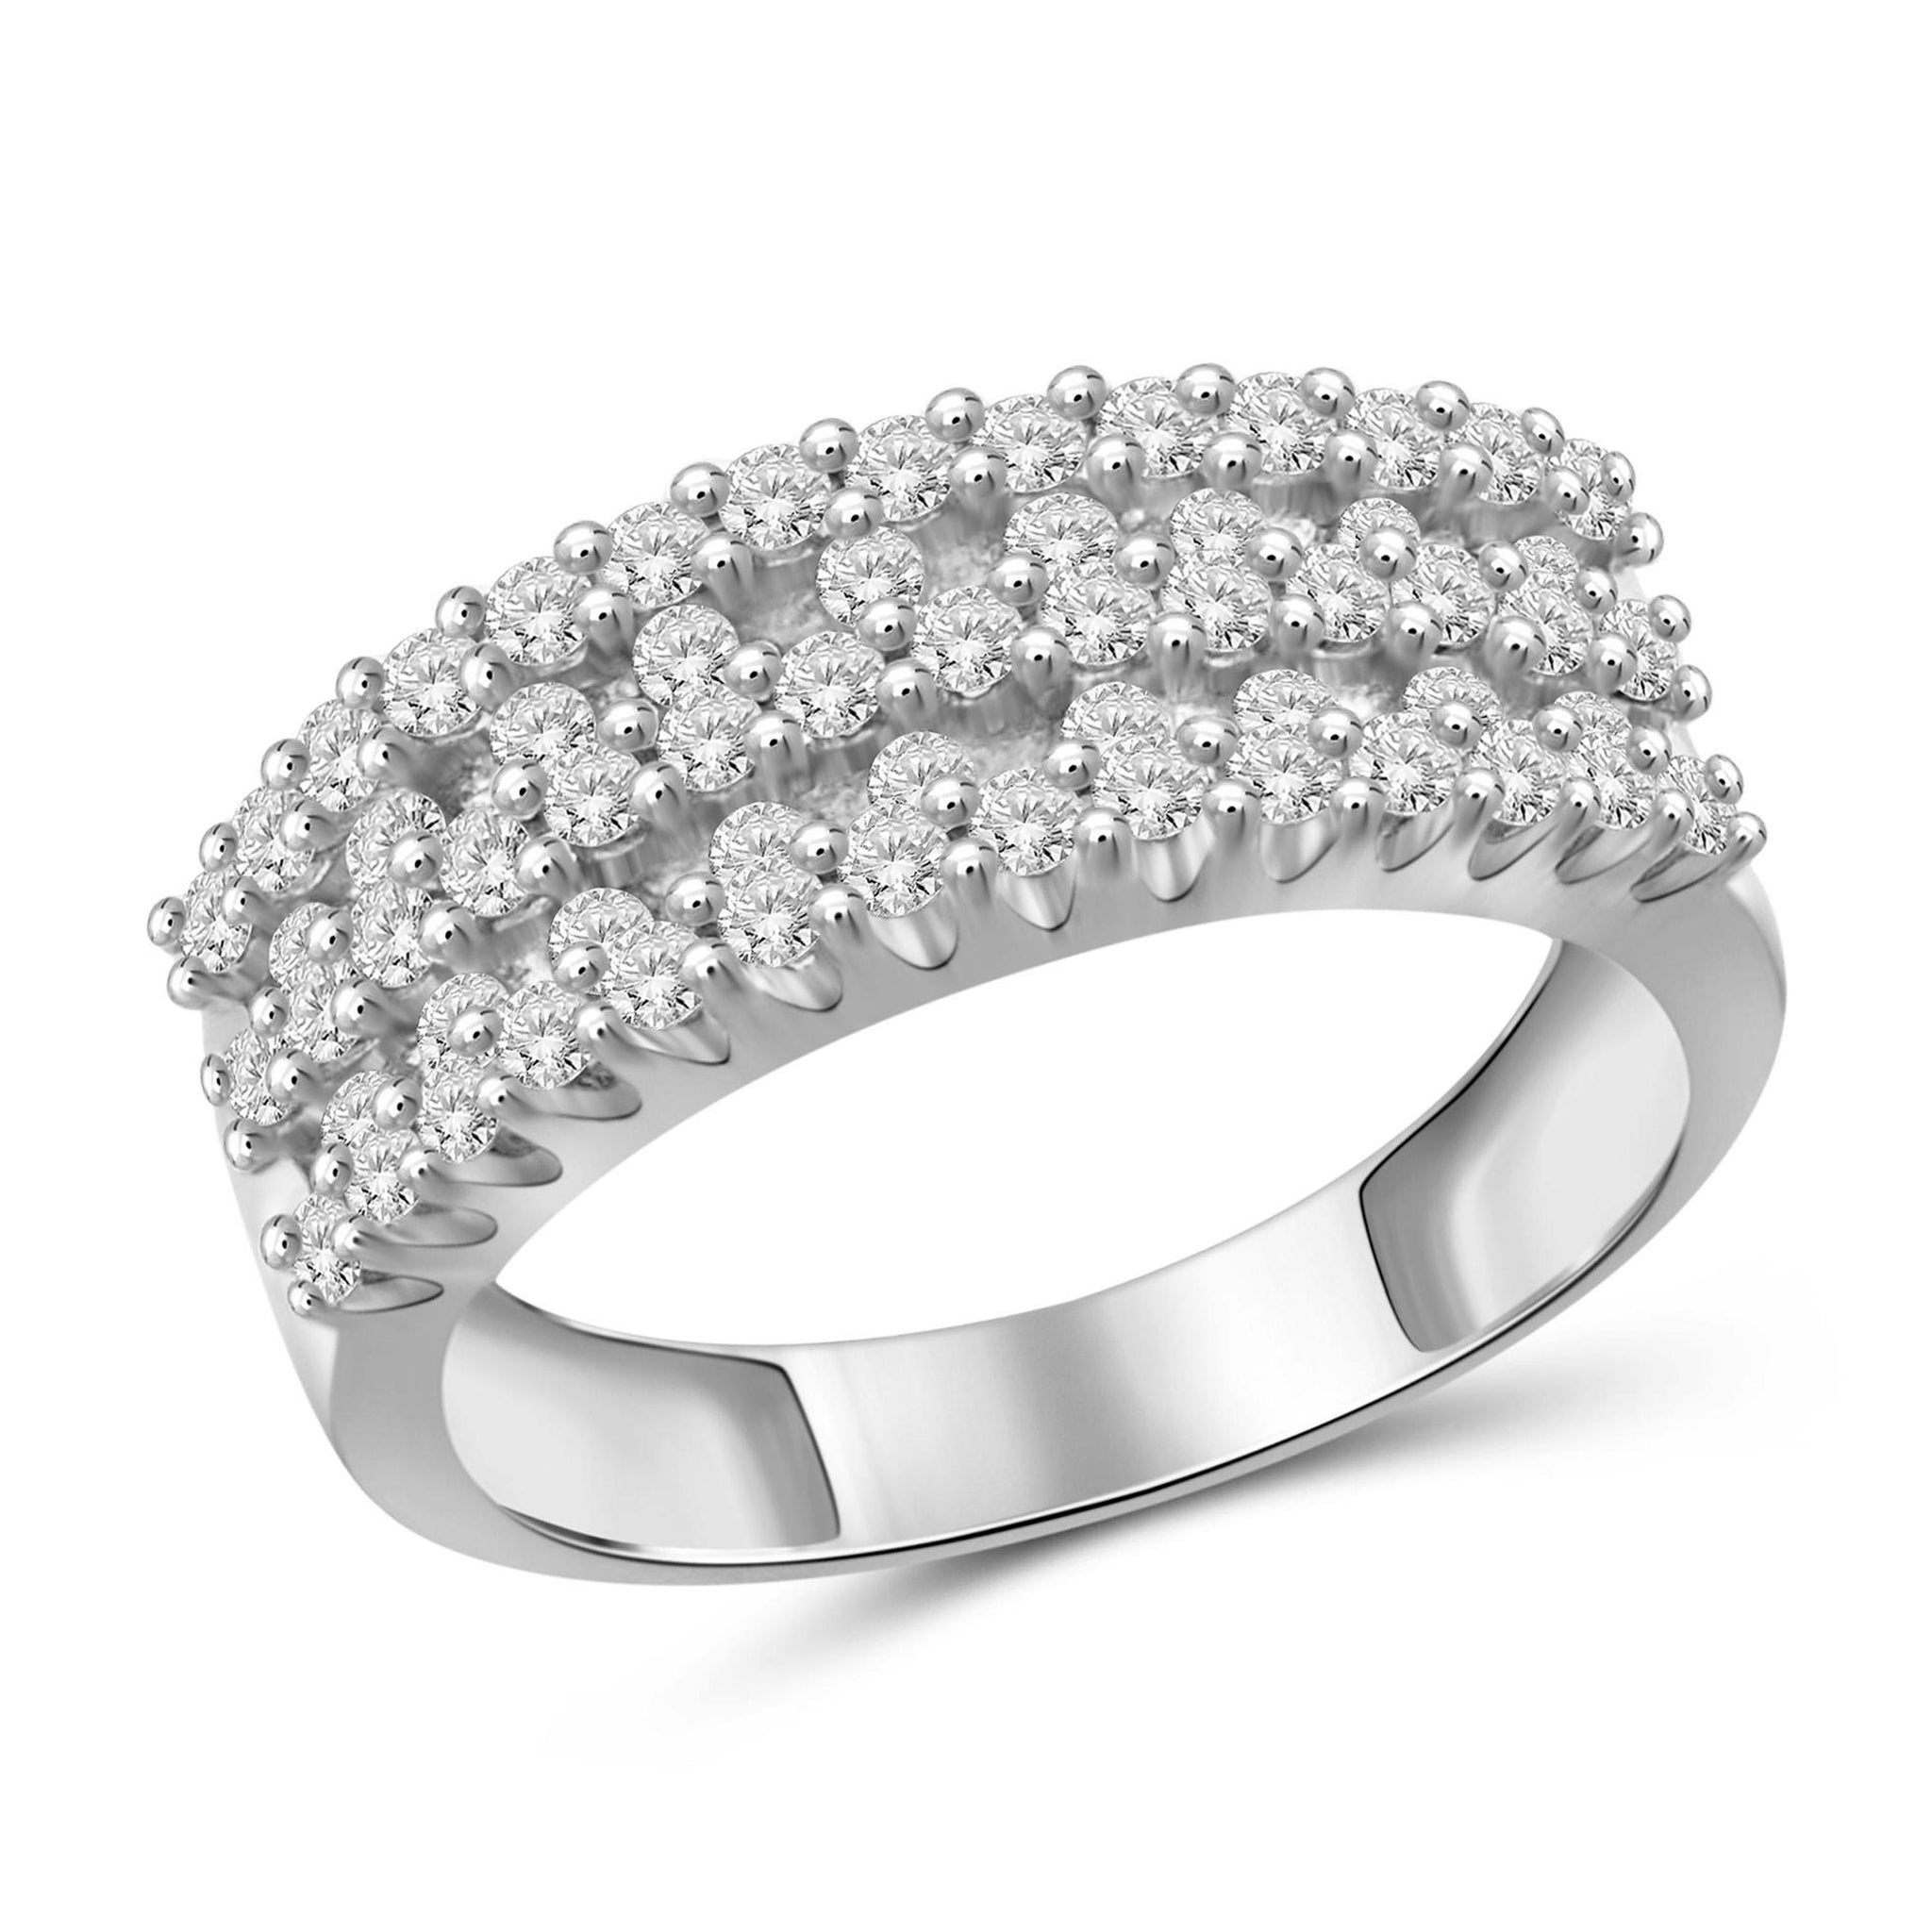 JewelonFire 1 Carat T.W. White Diamond Sterling Silver 2-Level Band Ring